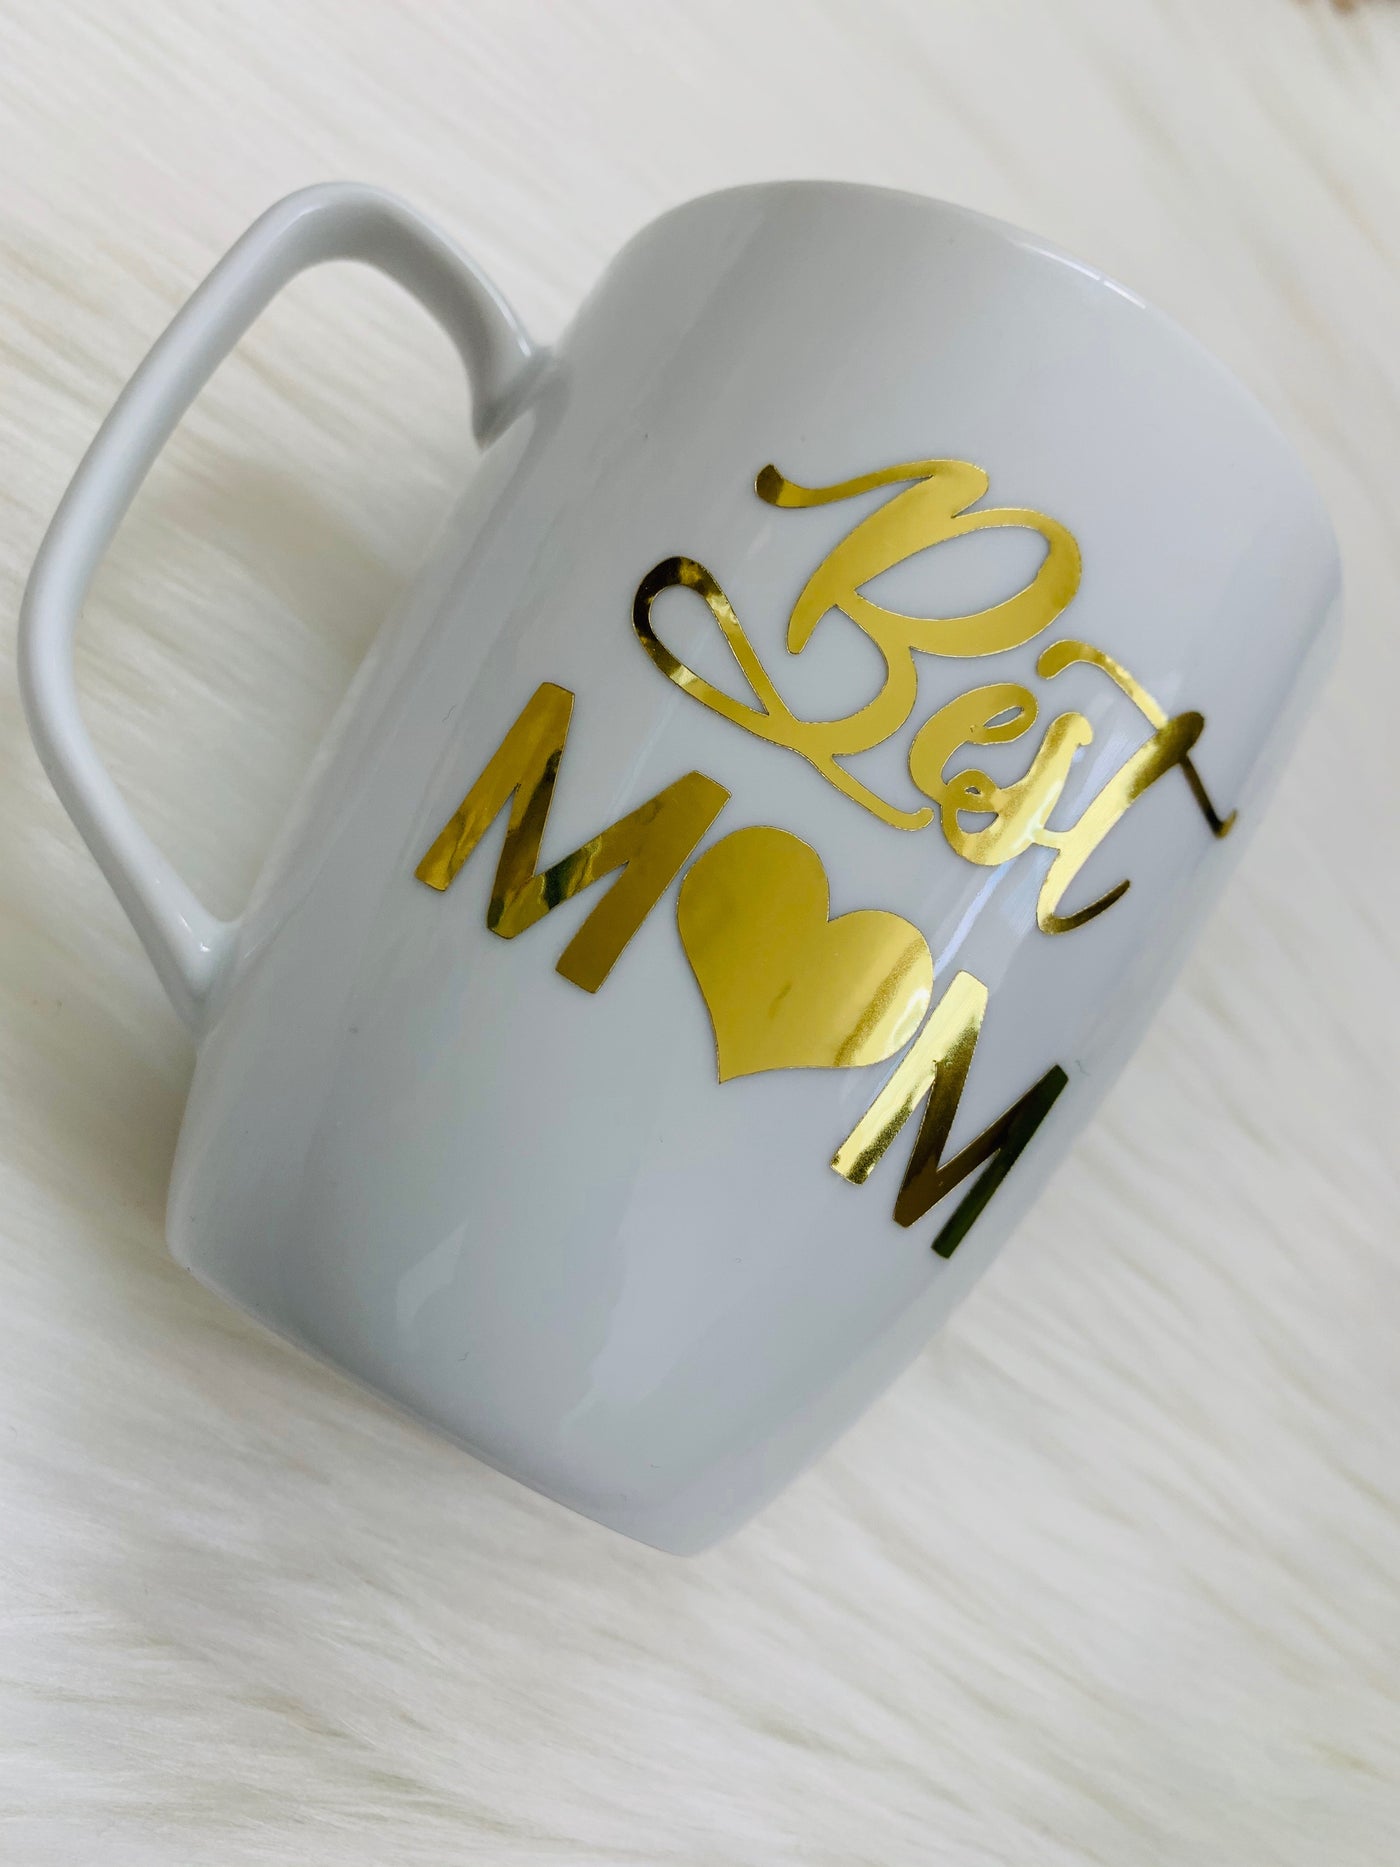 Personalized Mug - ShopAuthentique